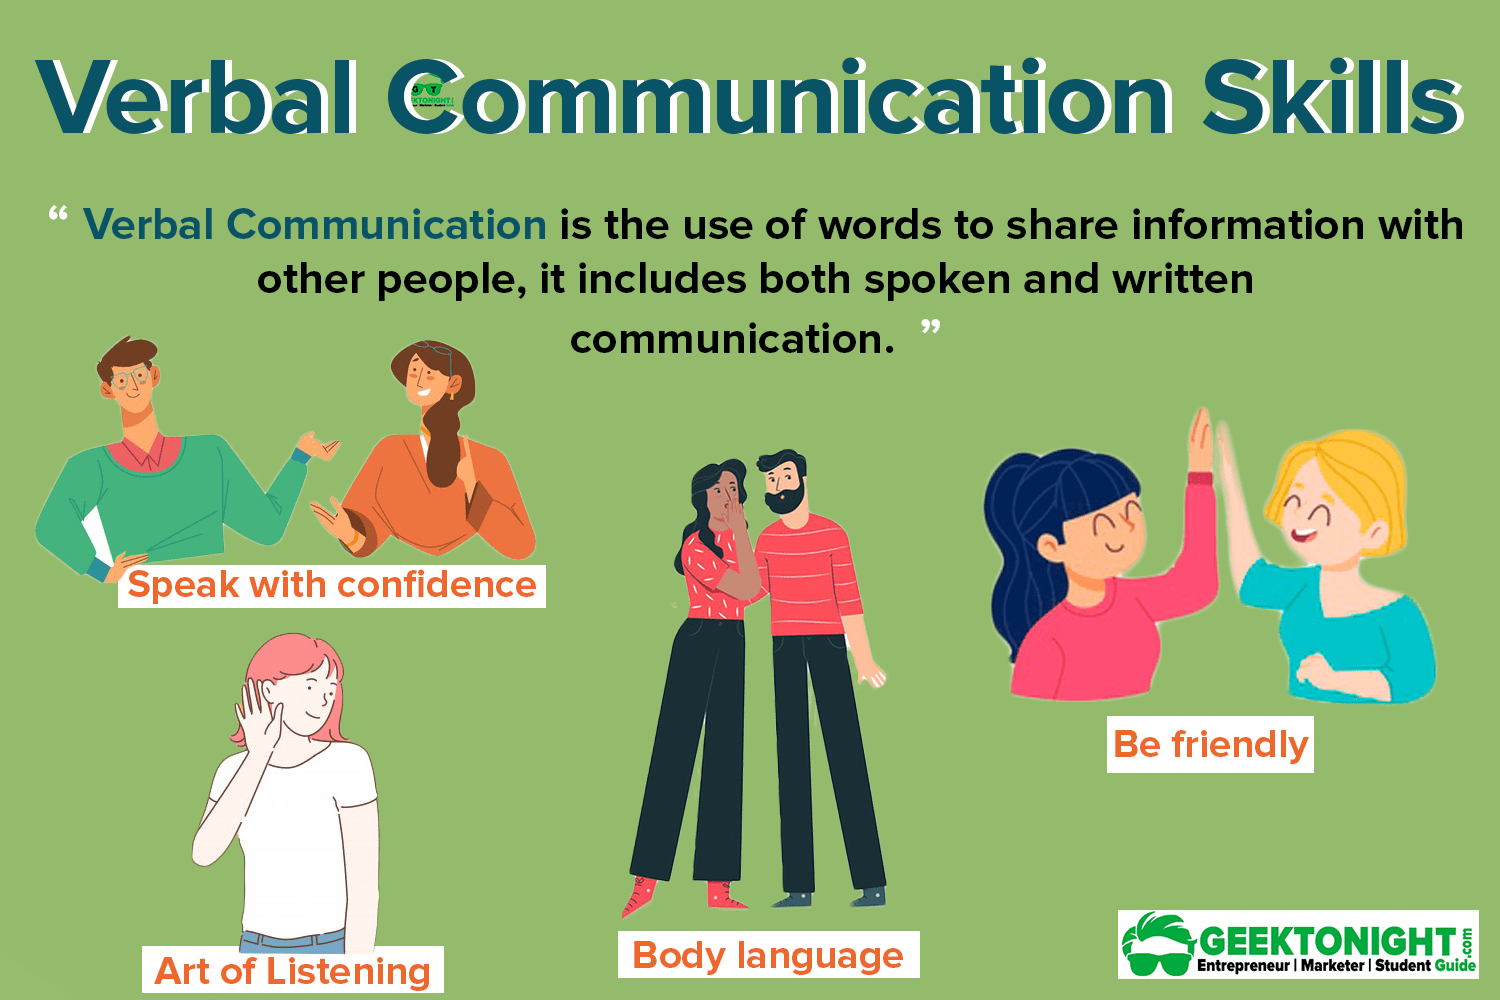 Verbal Communication 